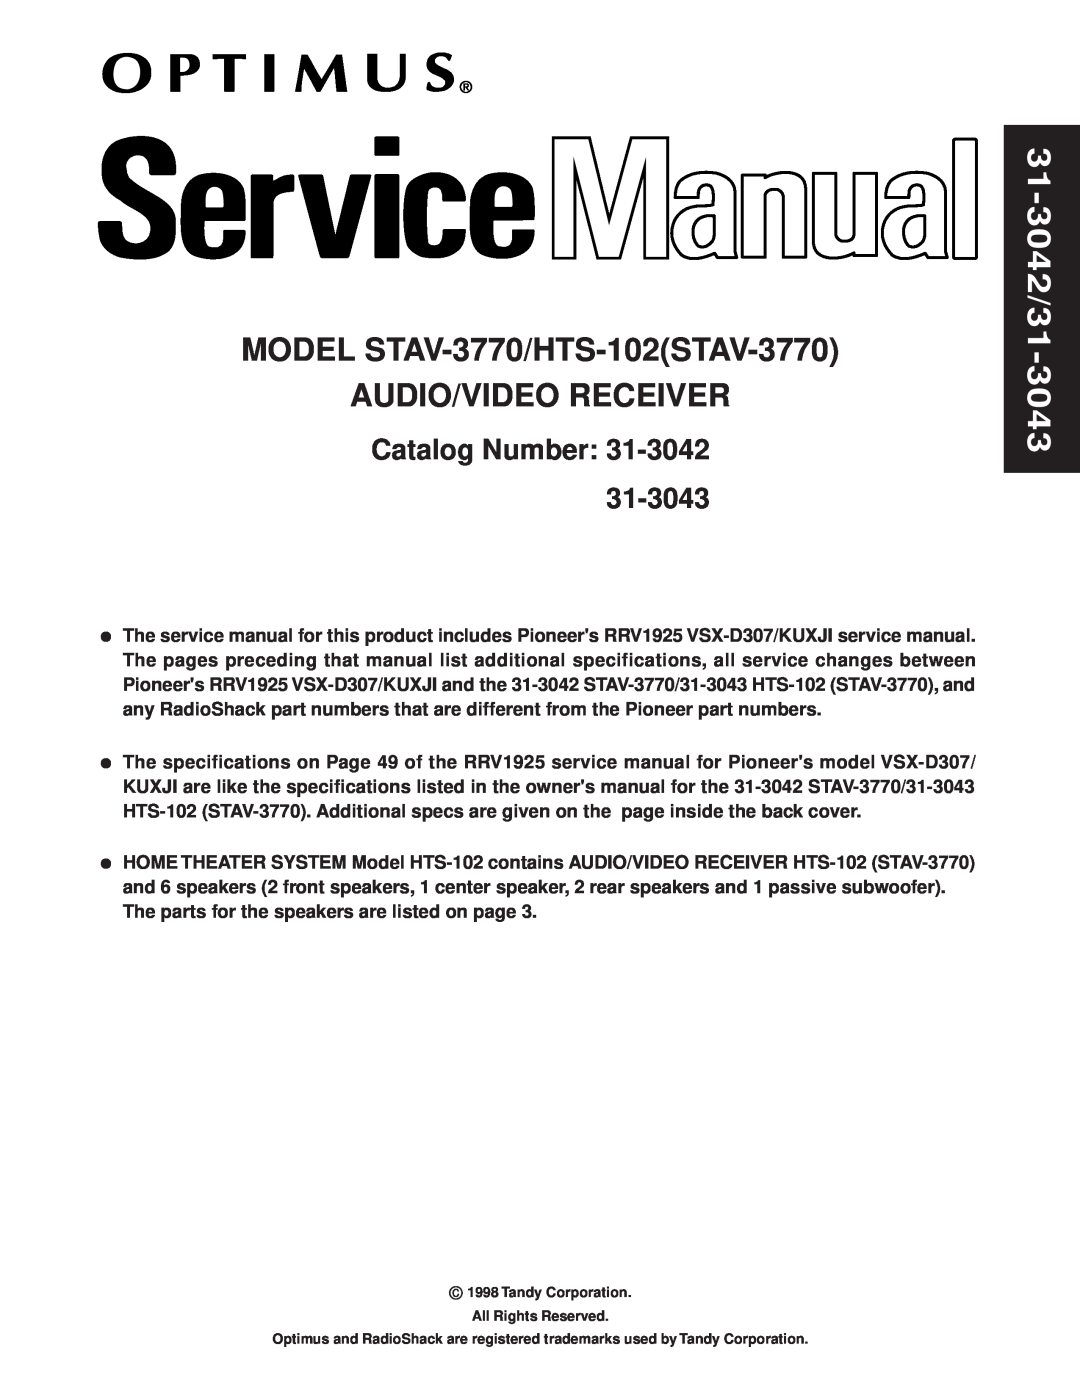 Dolby Laboratories 31-3043 service manual MODEL STAV-3770/HTS-102STAV-3770, Audio/Video Receiver, Catalog Number 